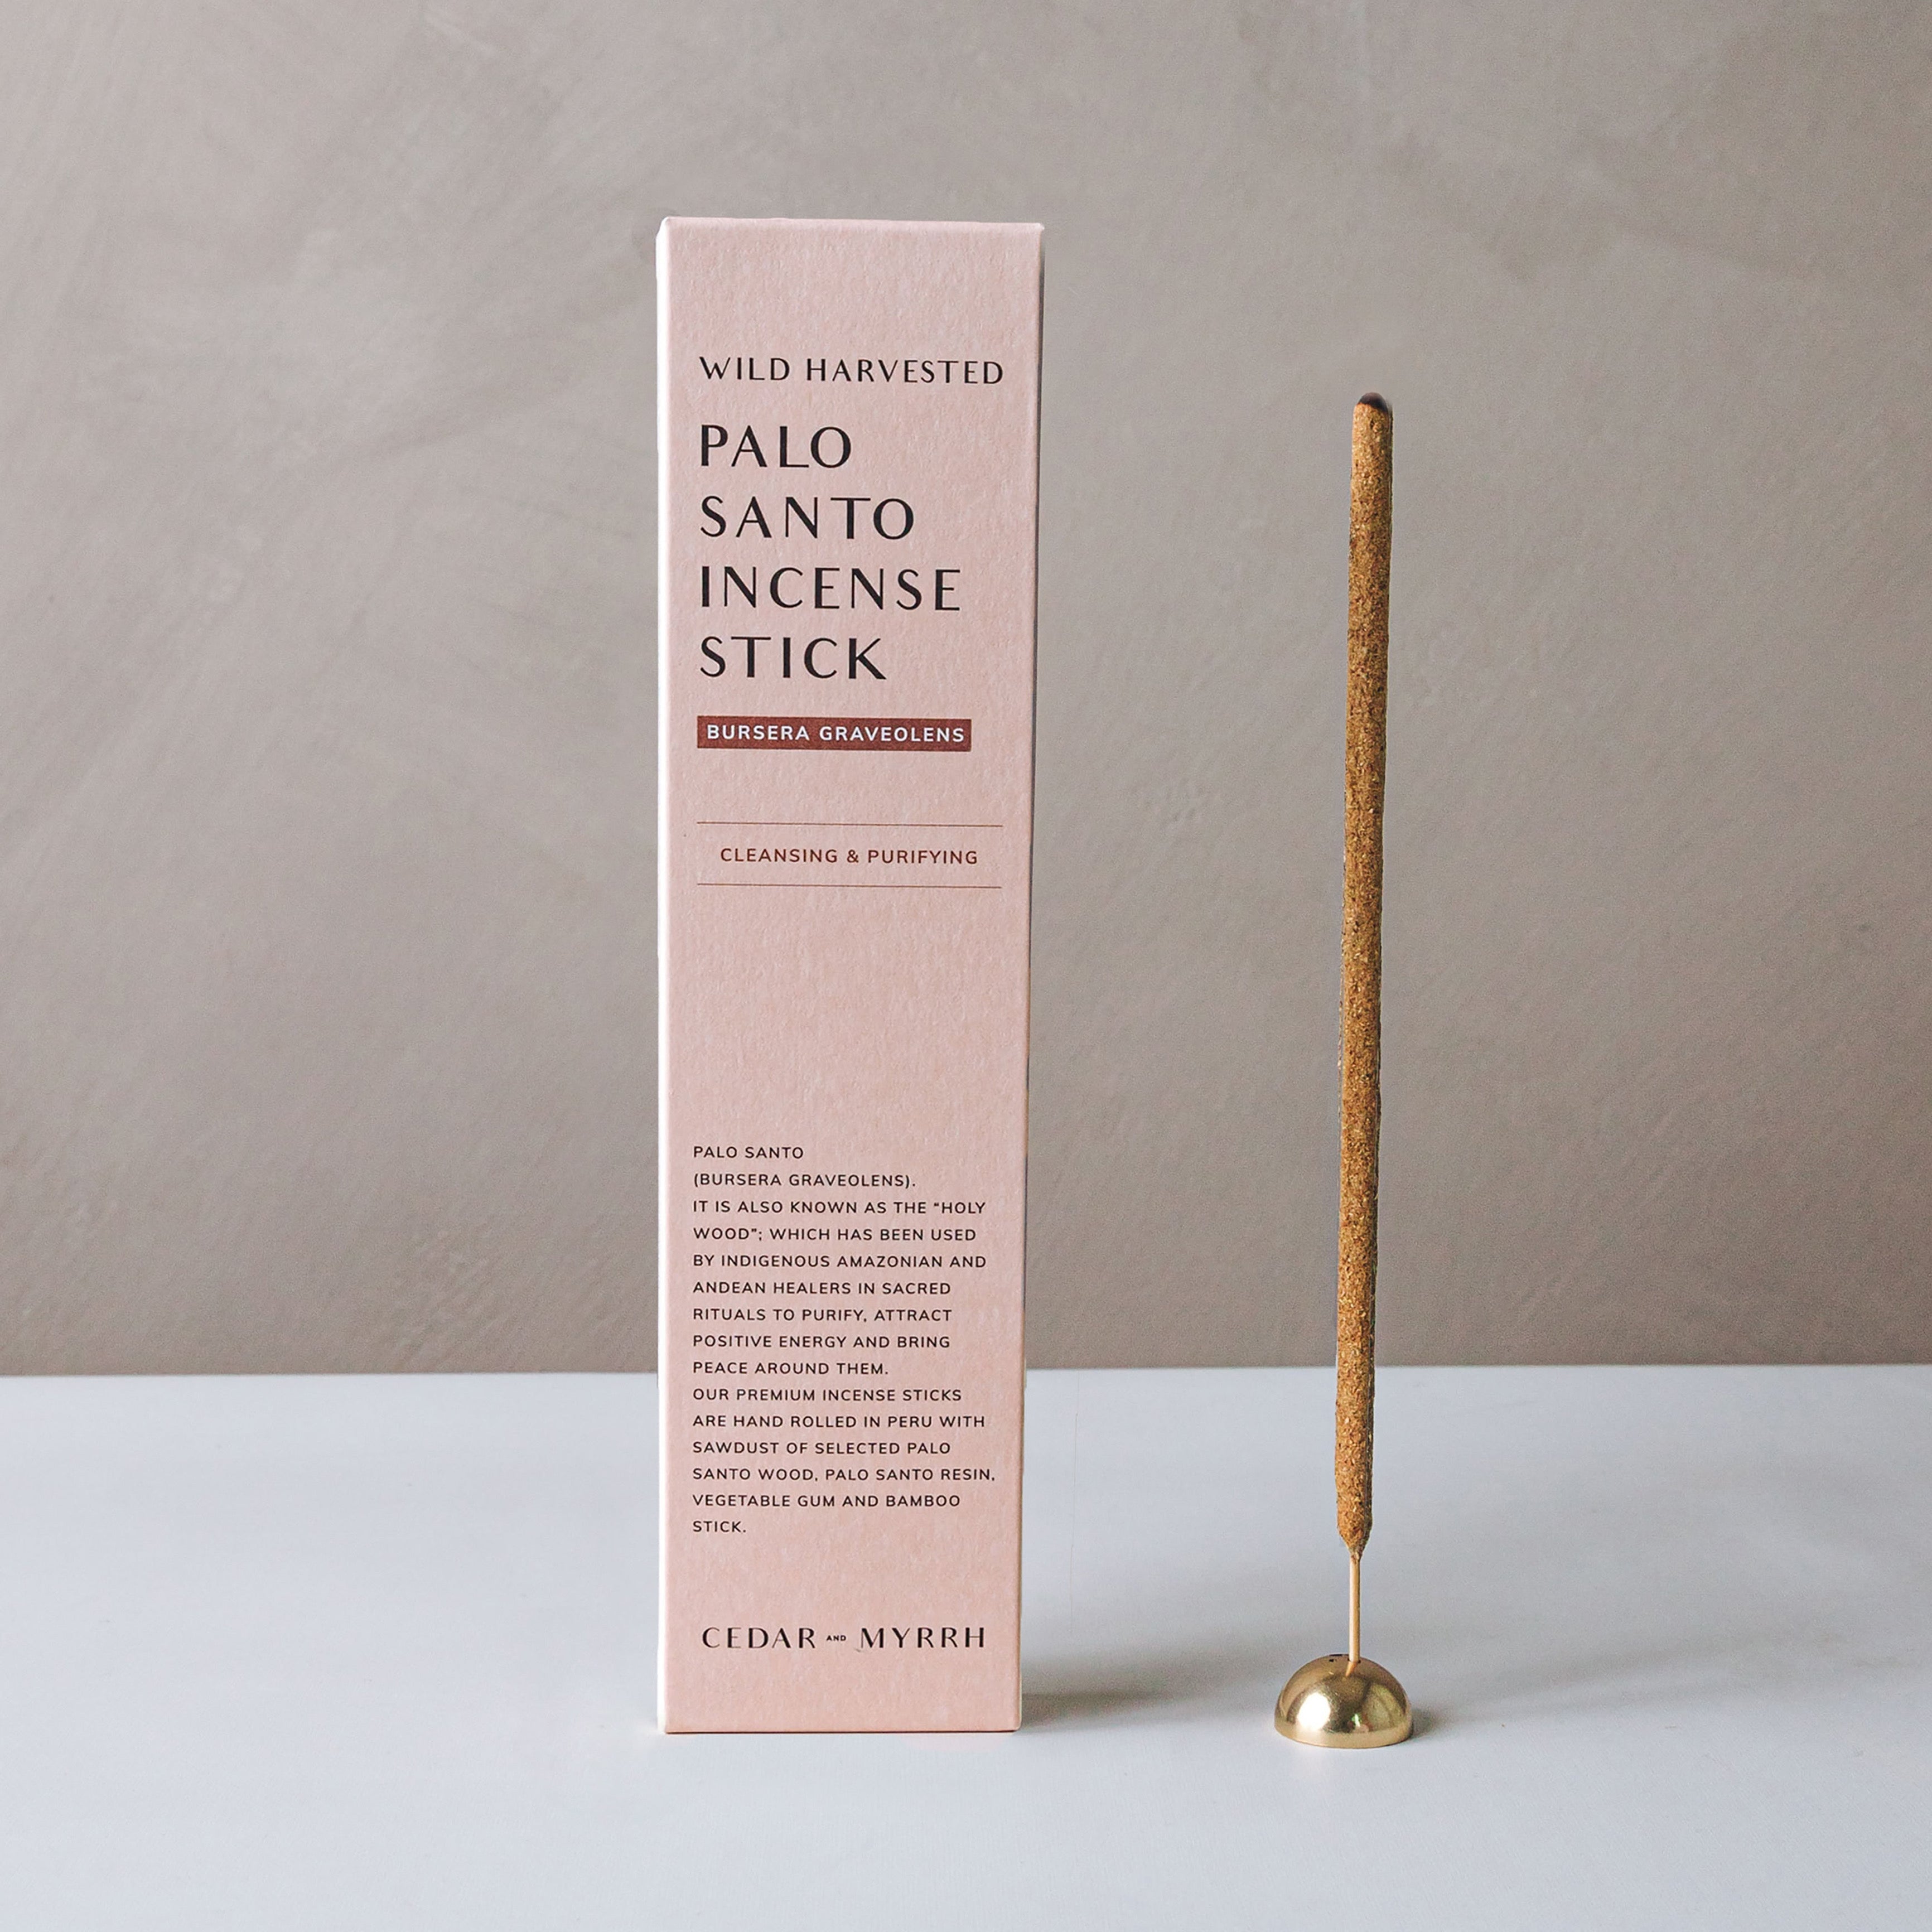 palo santo incense sticks by Wild Harvested brand